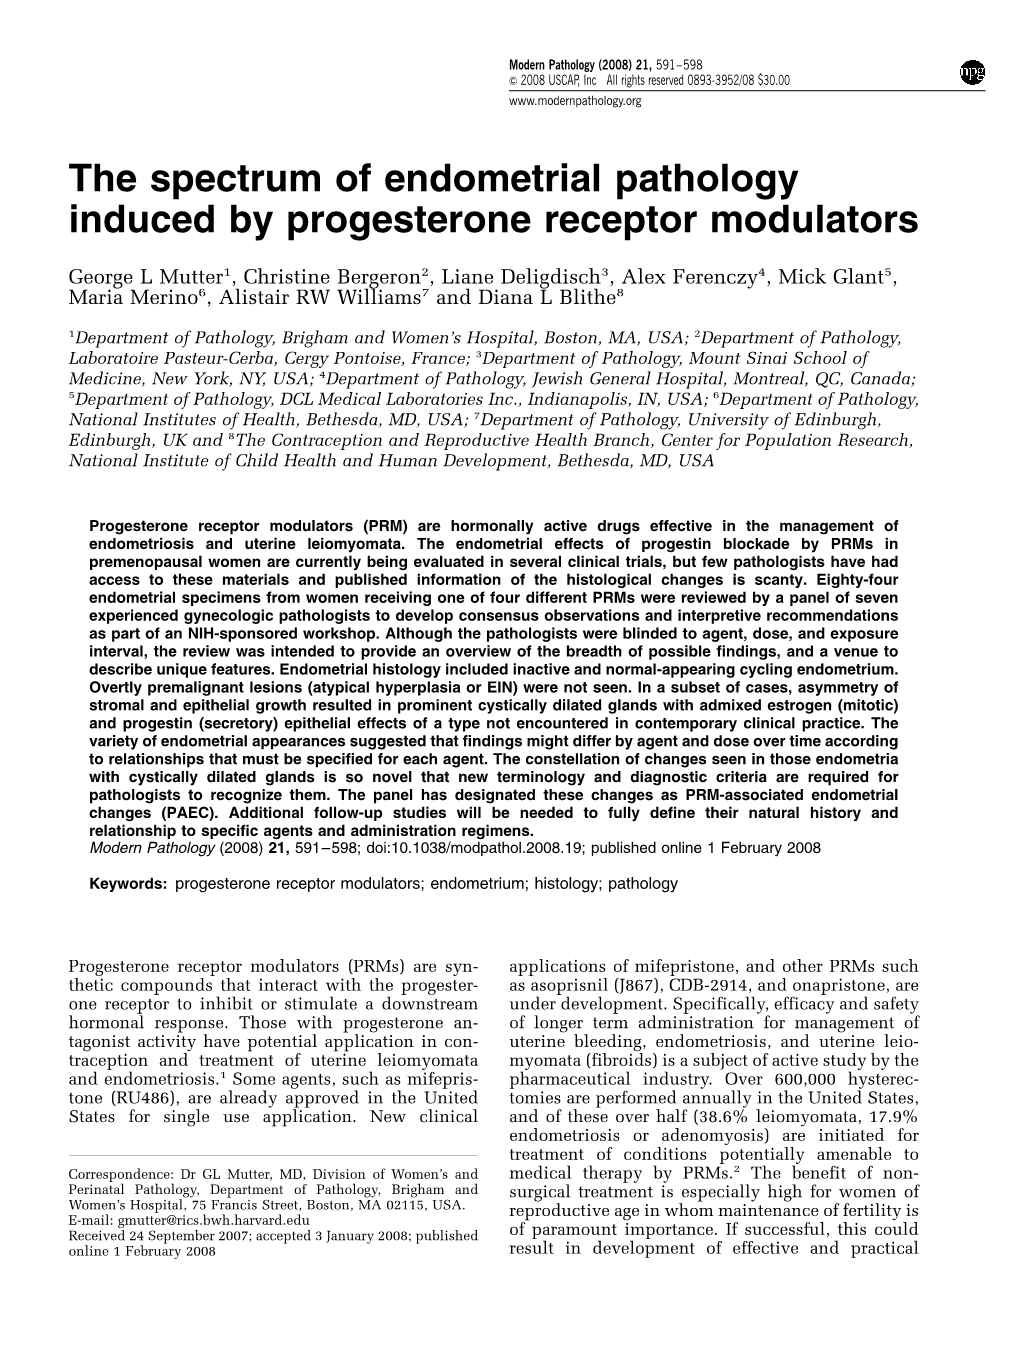 The Spectrum of Endometrial Pathology Induced by Progesterone Receptor Modulators